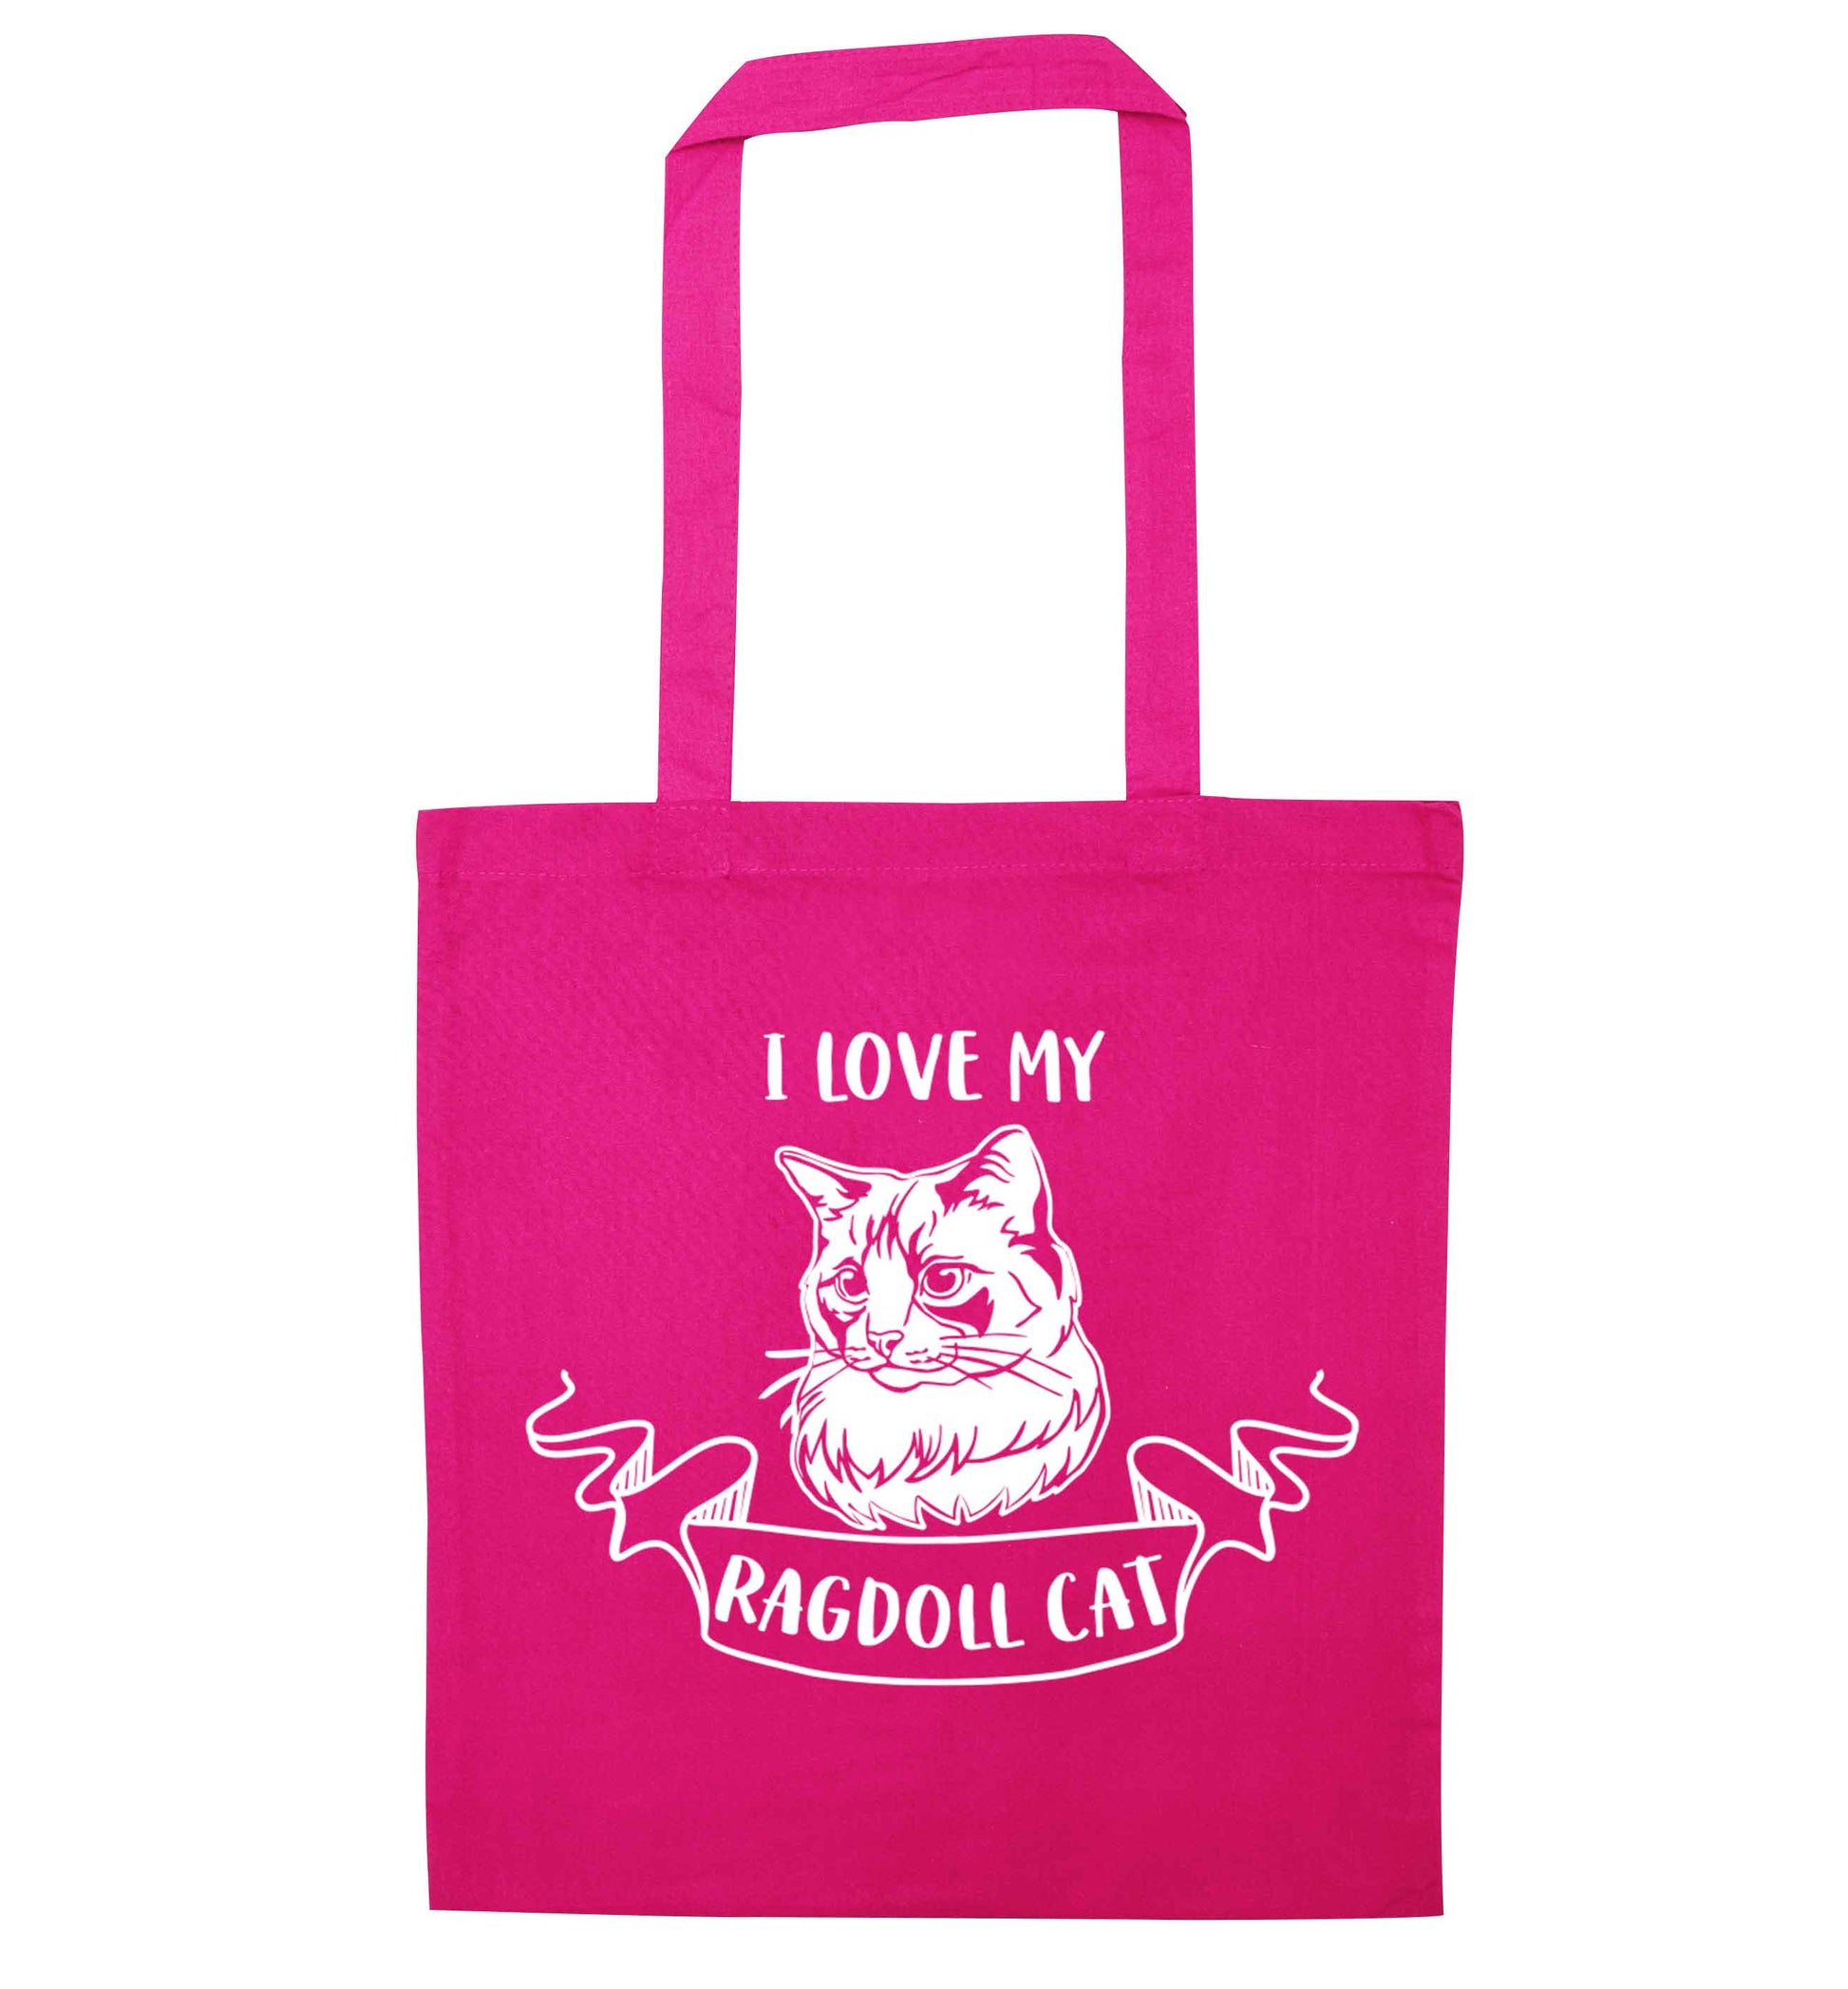 I love my ragdoll cat pink tote bag